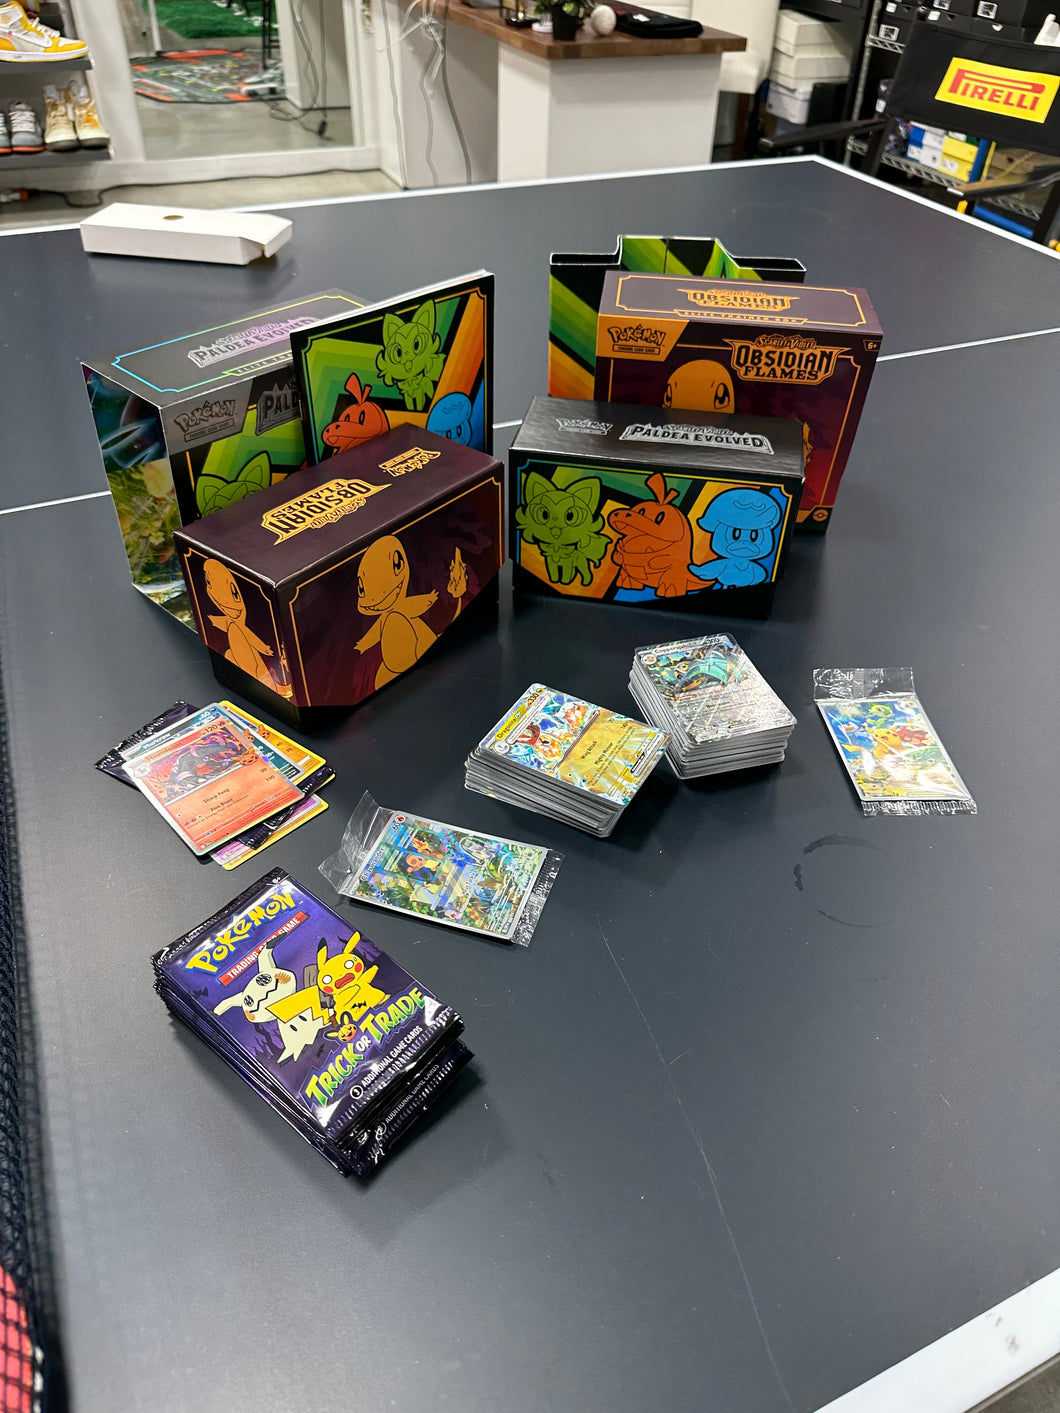 Pokemon Card Boxes 2 ETB + 25 BOOster Packs